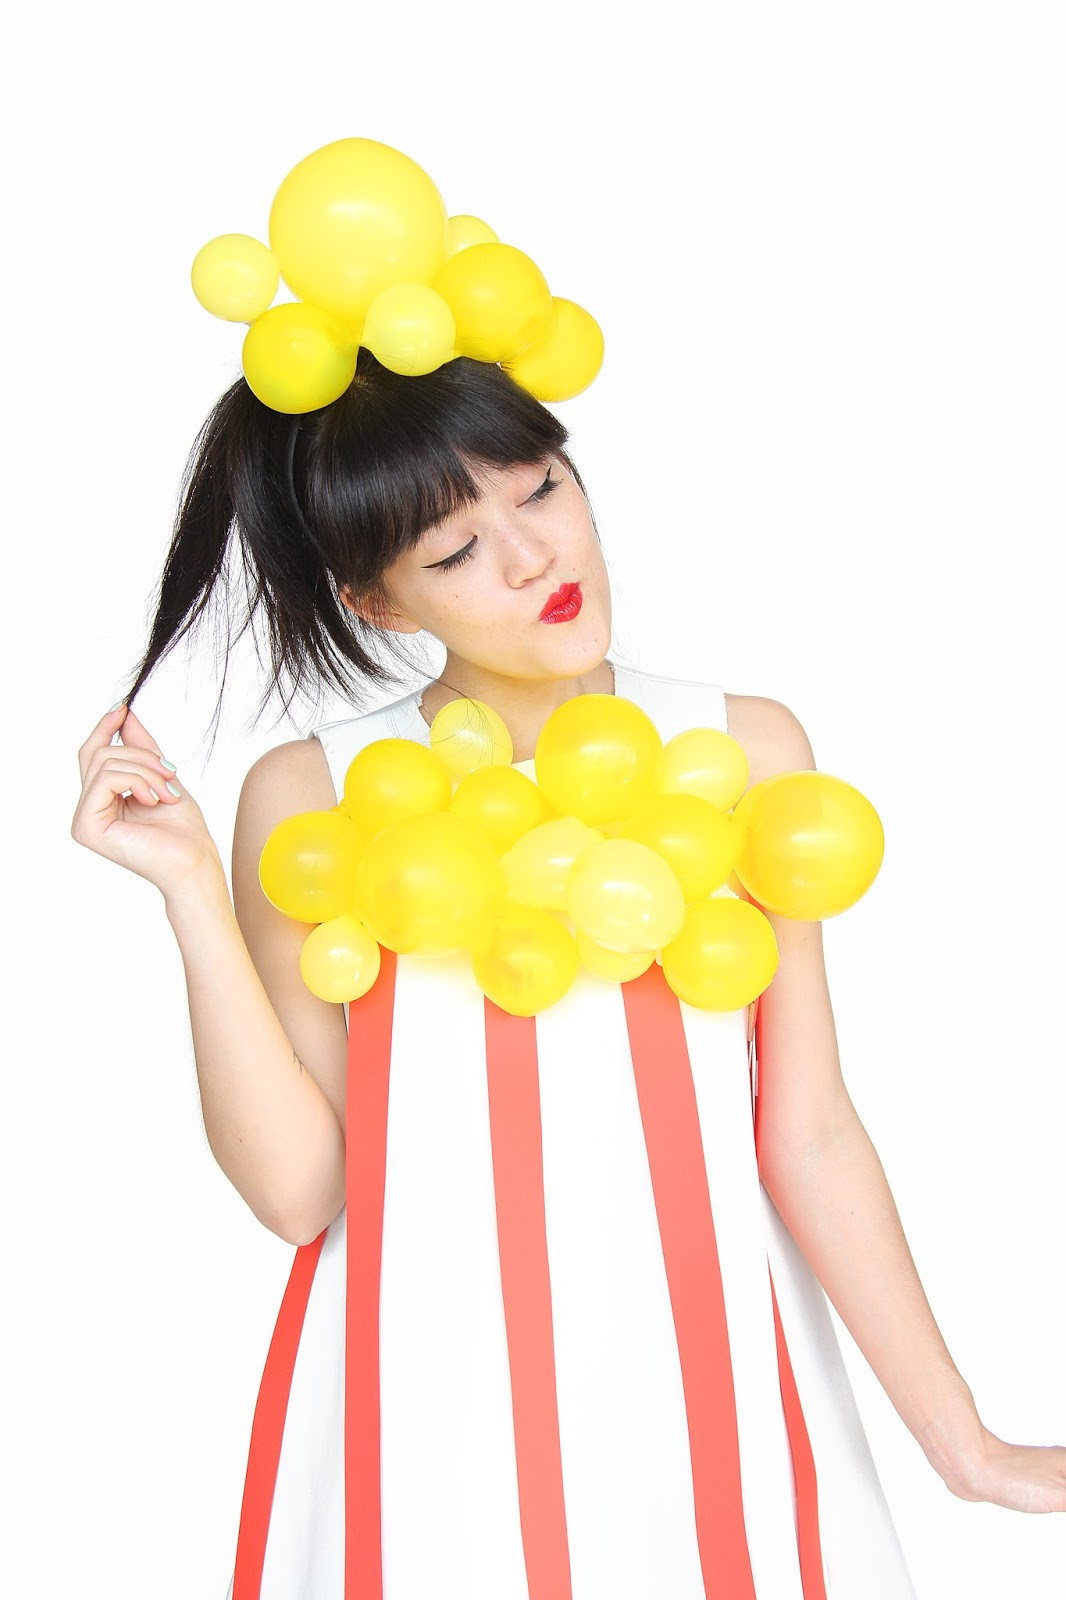 Best ideas about DIY Popcorn Costume
. Save or Pin Aww Sam DIY Popcorn Halloween Costume Now.